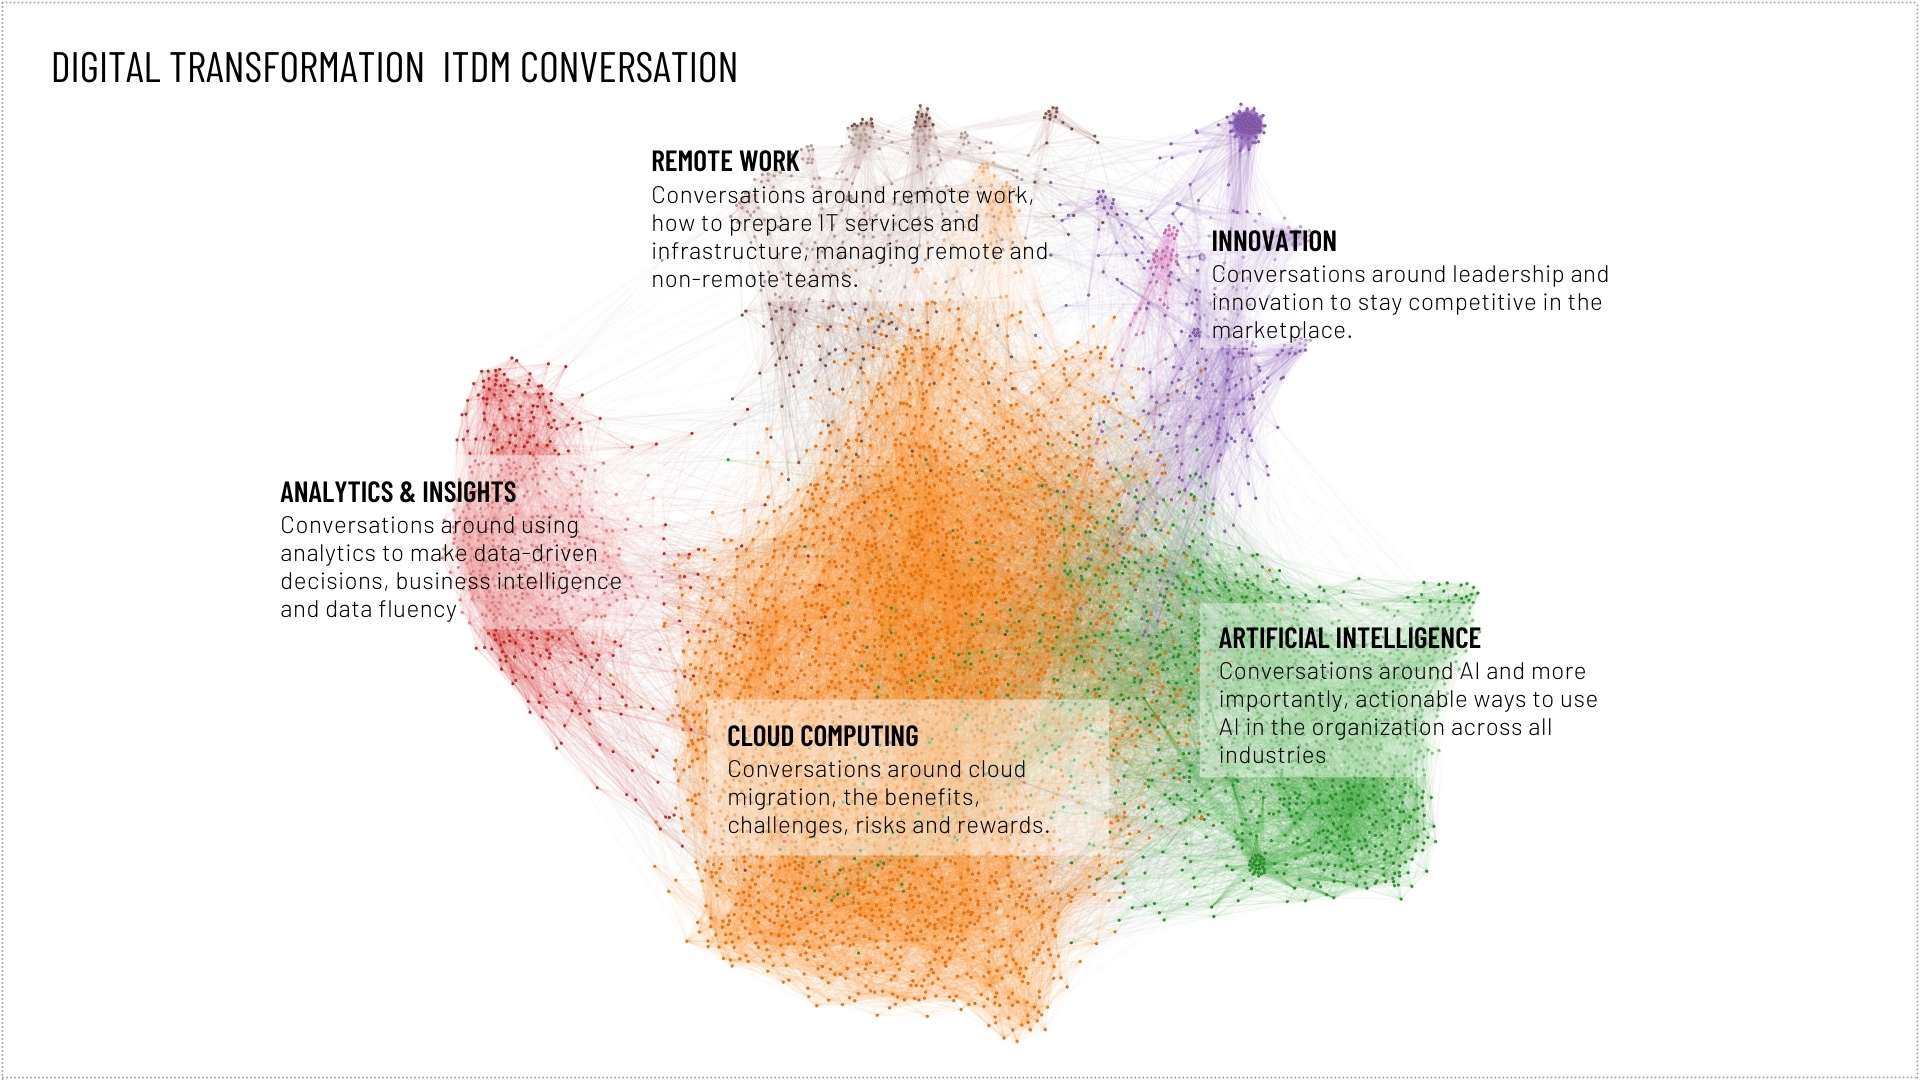 A conversation analytics example of digital transformation.